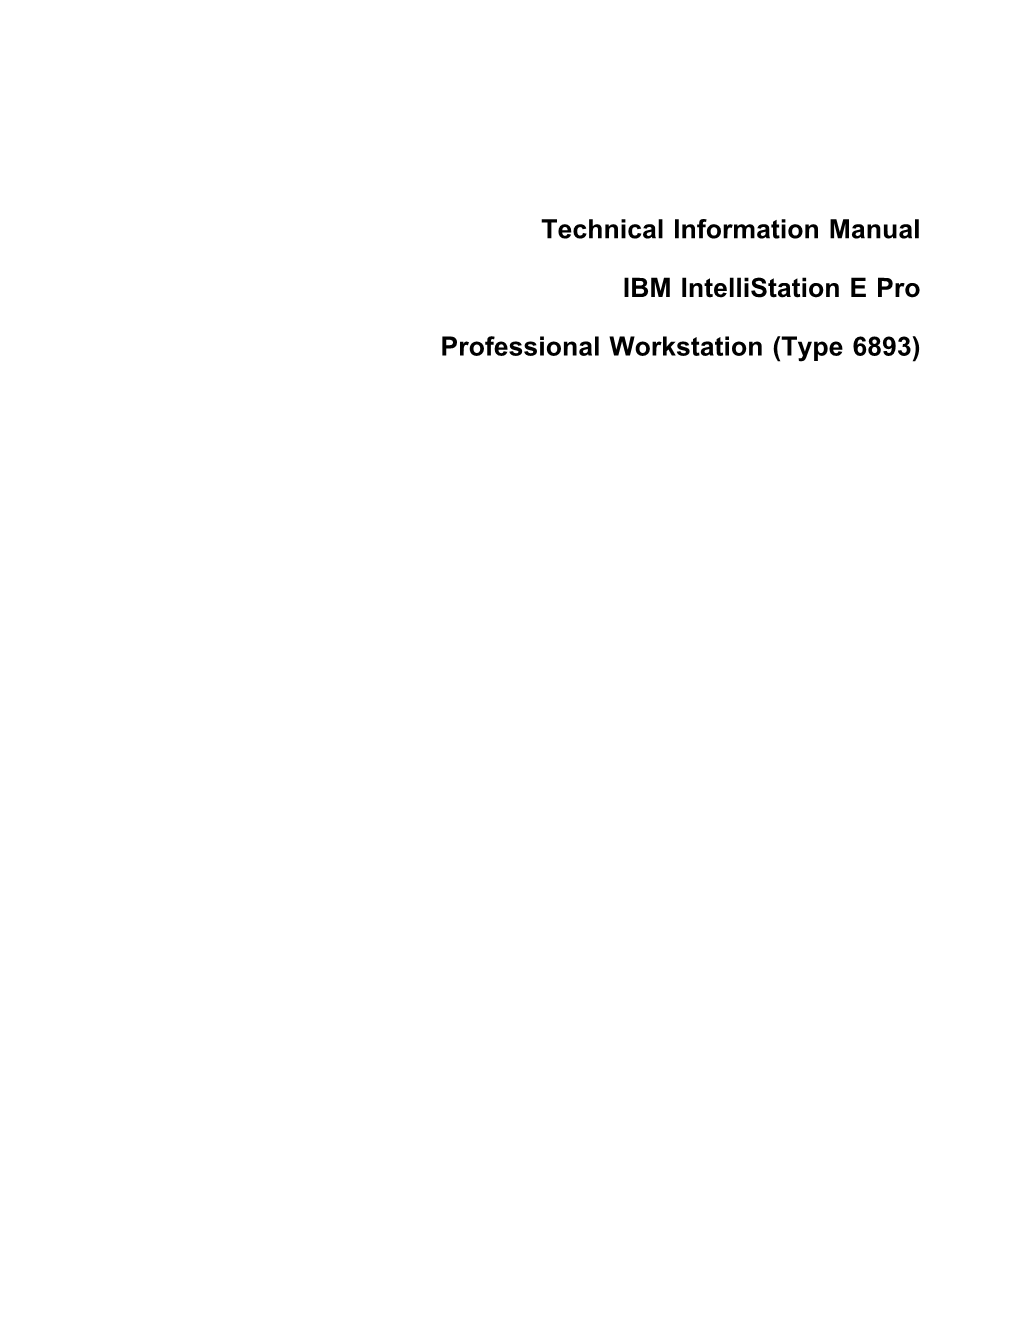 Technical Information Manual IBM Intellistation E Pro Professional